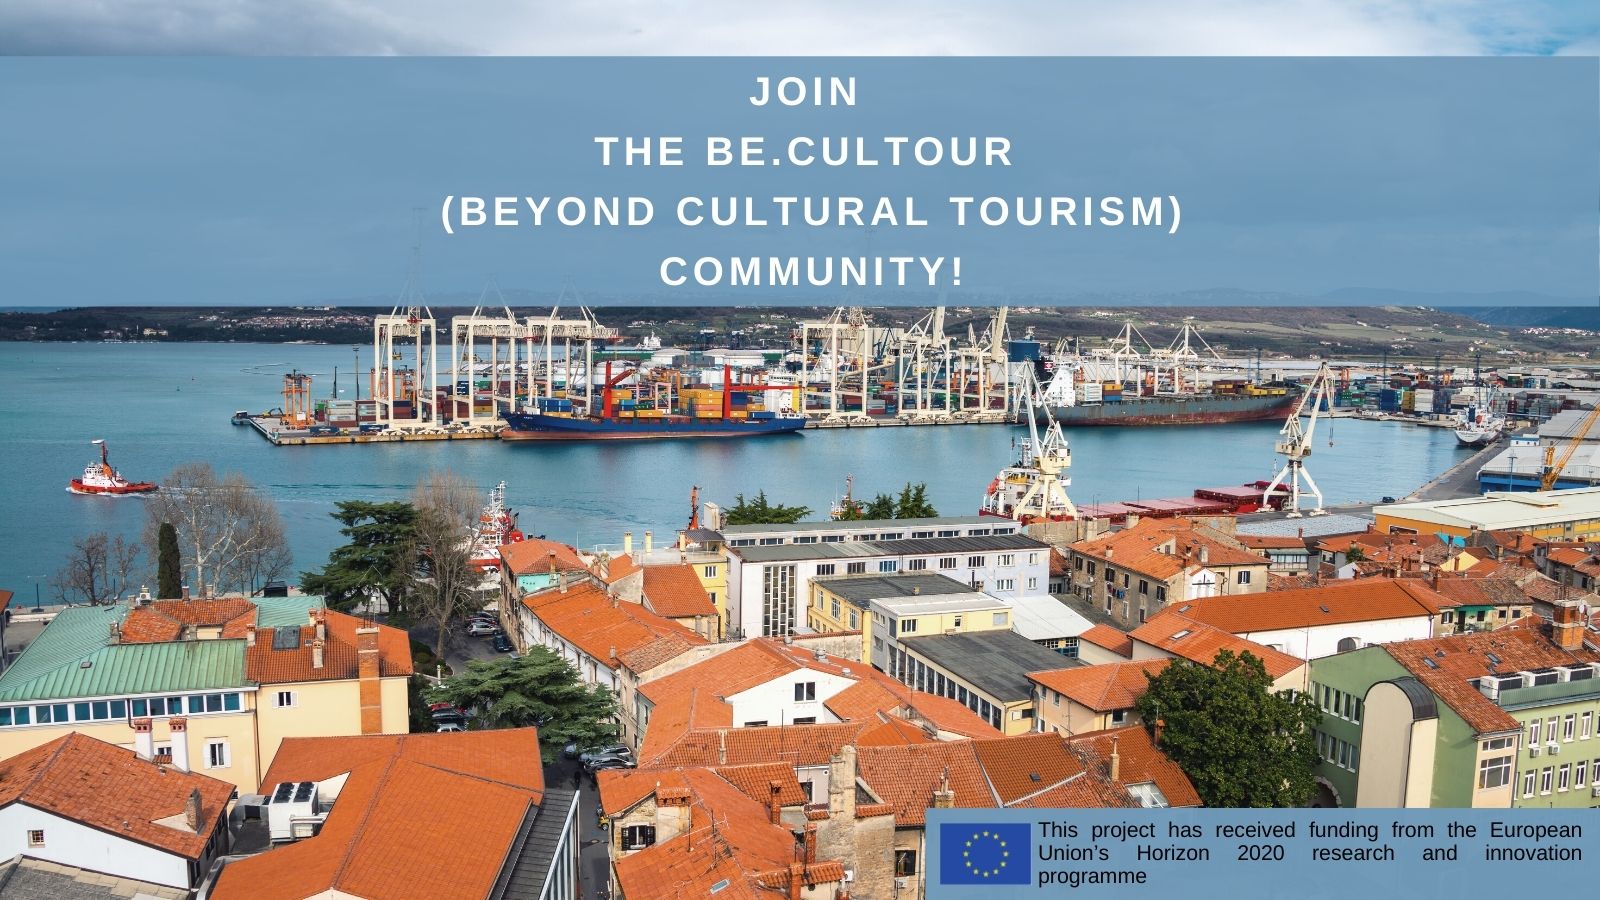 The Be.CULTOUR (Beyond Cultural Tourism) Community